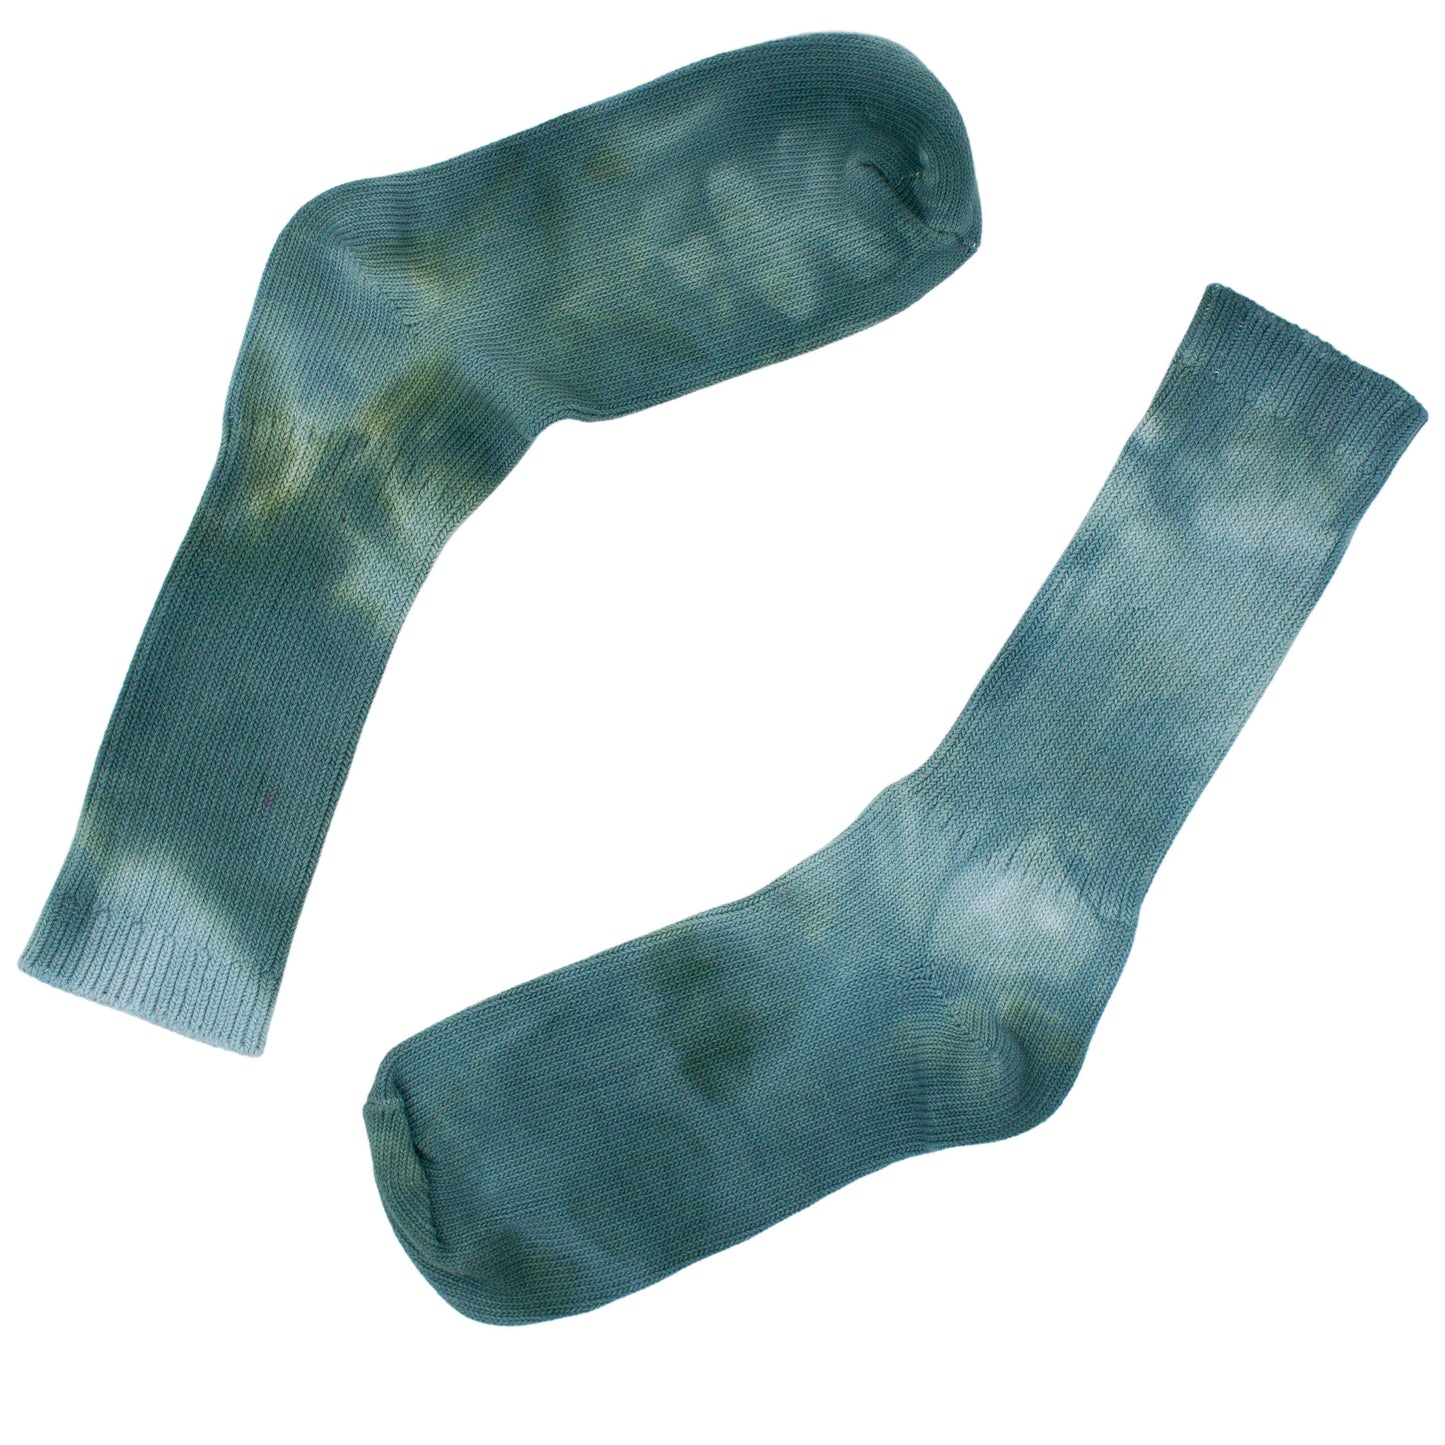 Best-Selling Sock Bundle: Violet, Sage Green & Turquoise Grunge Organic Cotton Hand-Dyed Tennis Socks